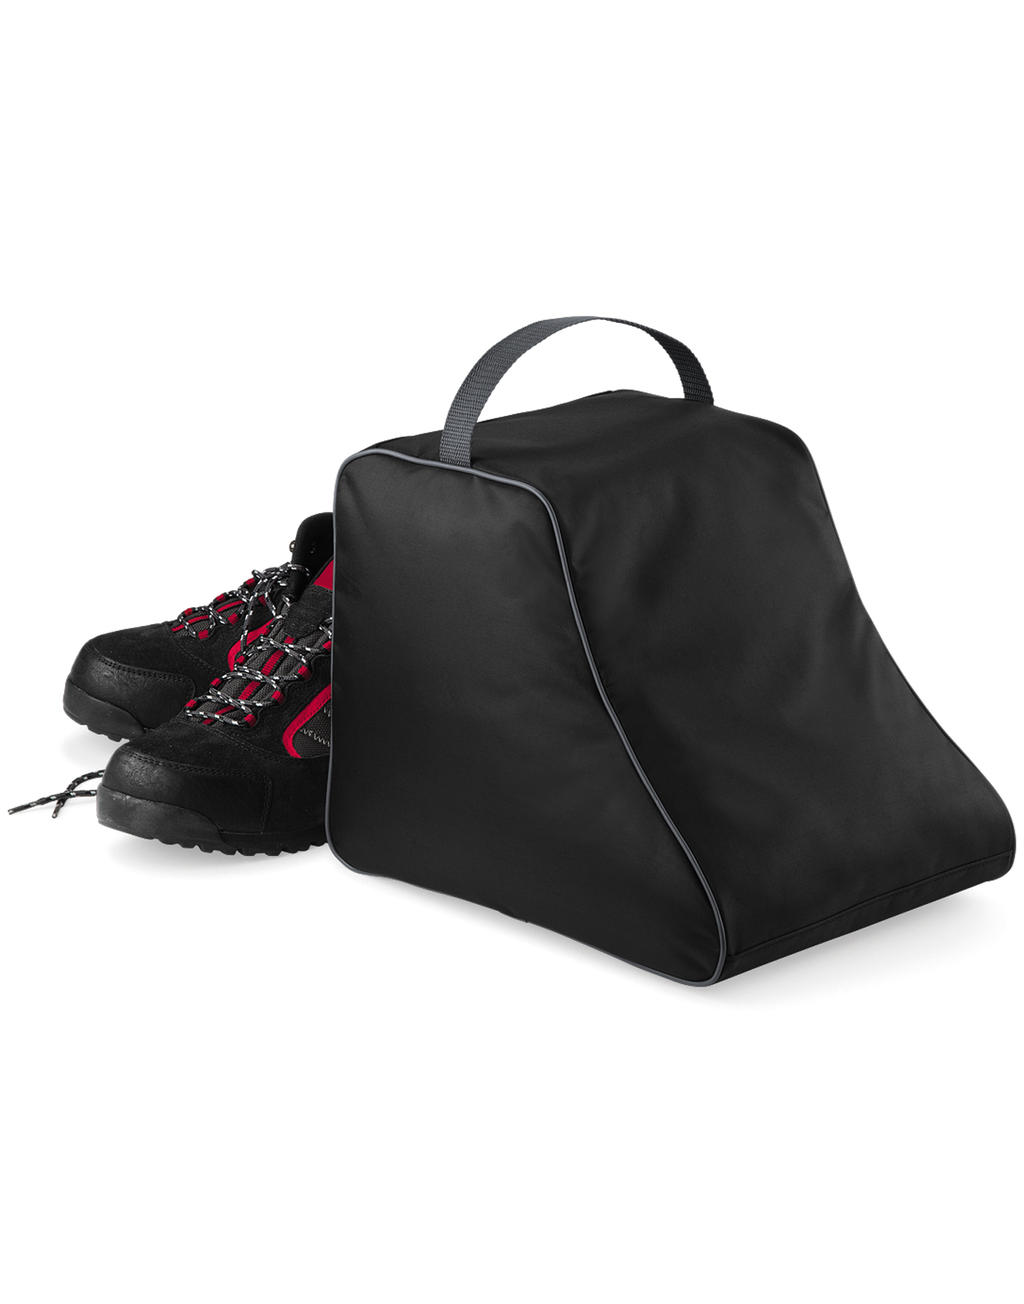  Hiking Boot Bag in Farbe Black/Graphite